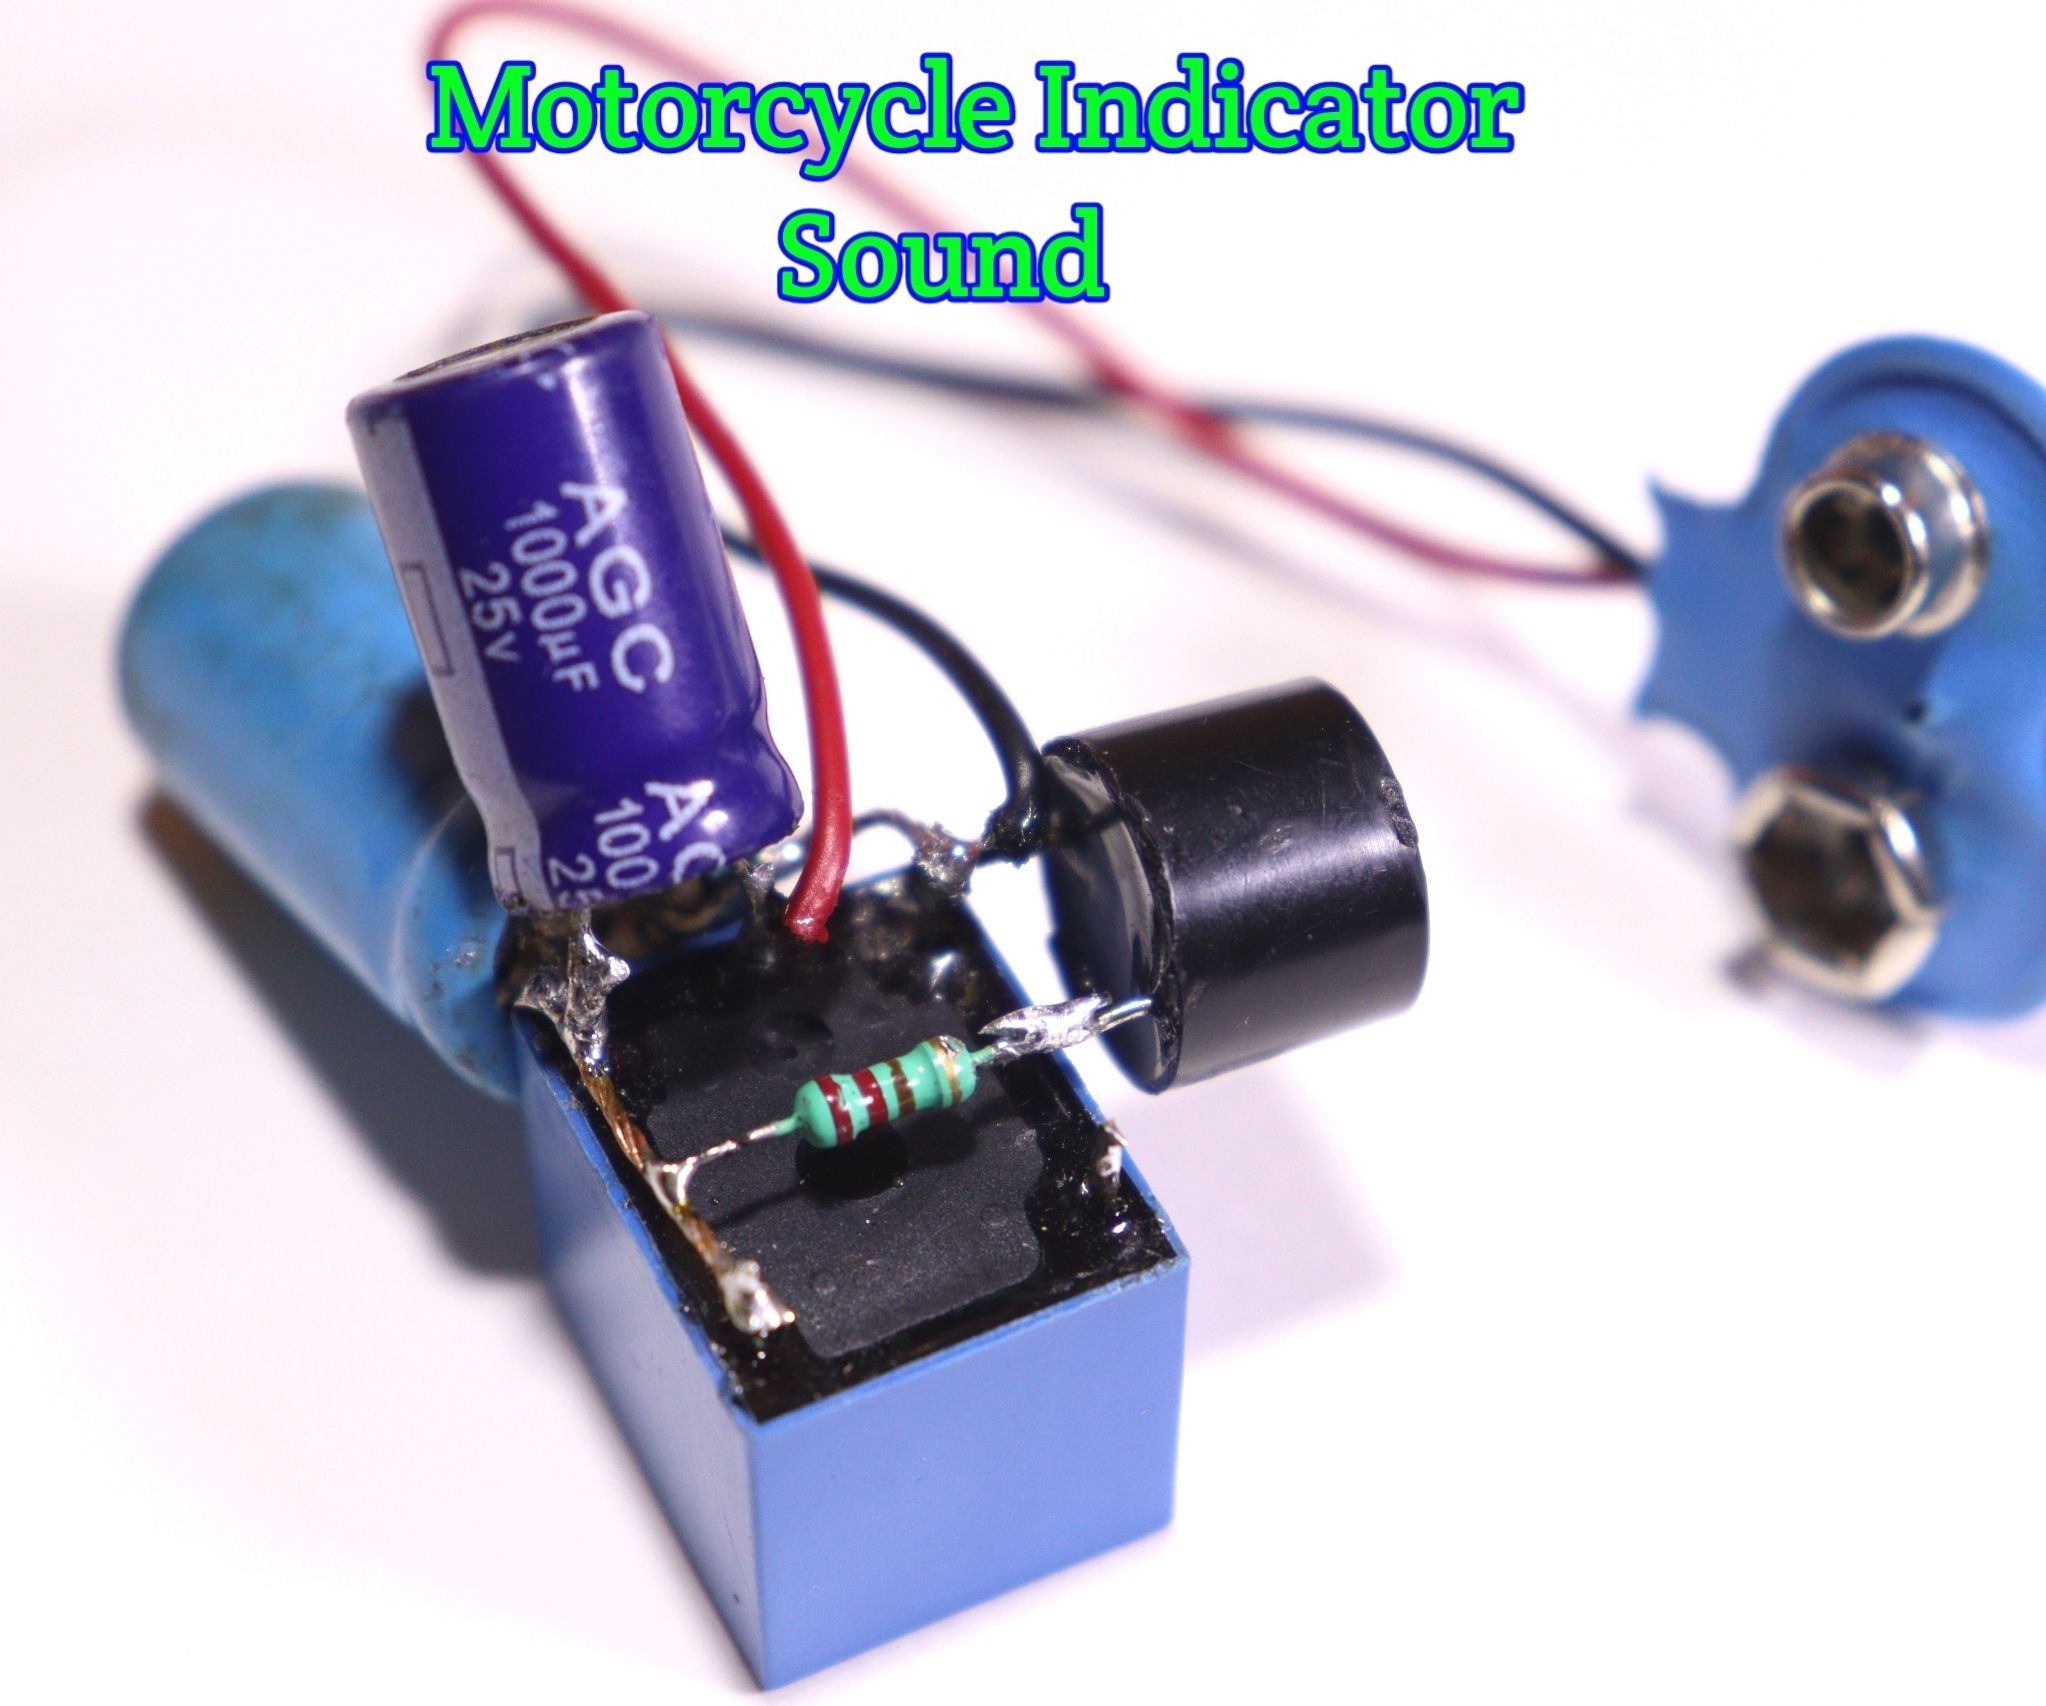 MotorCycle Indicator Sound Generator Using Relay